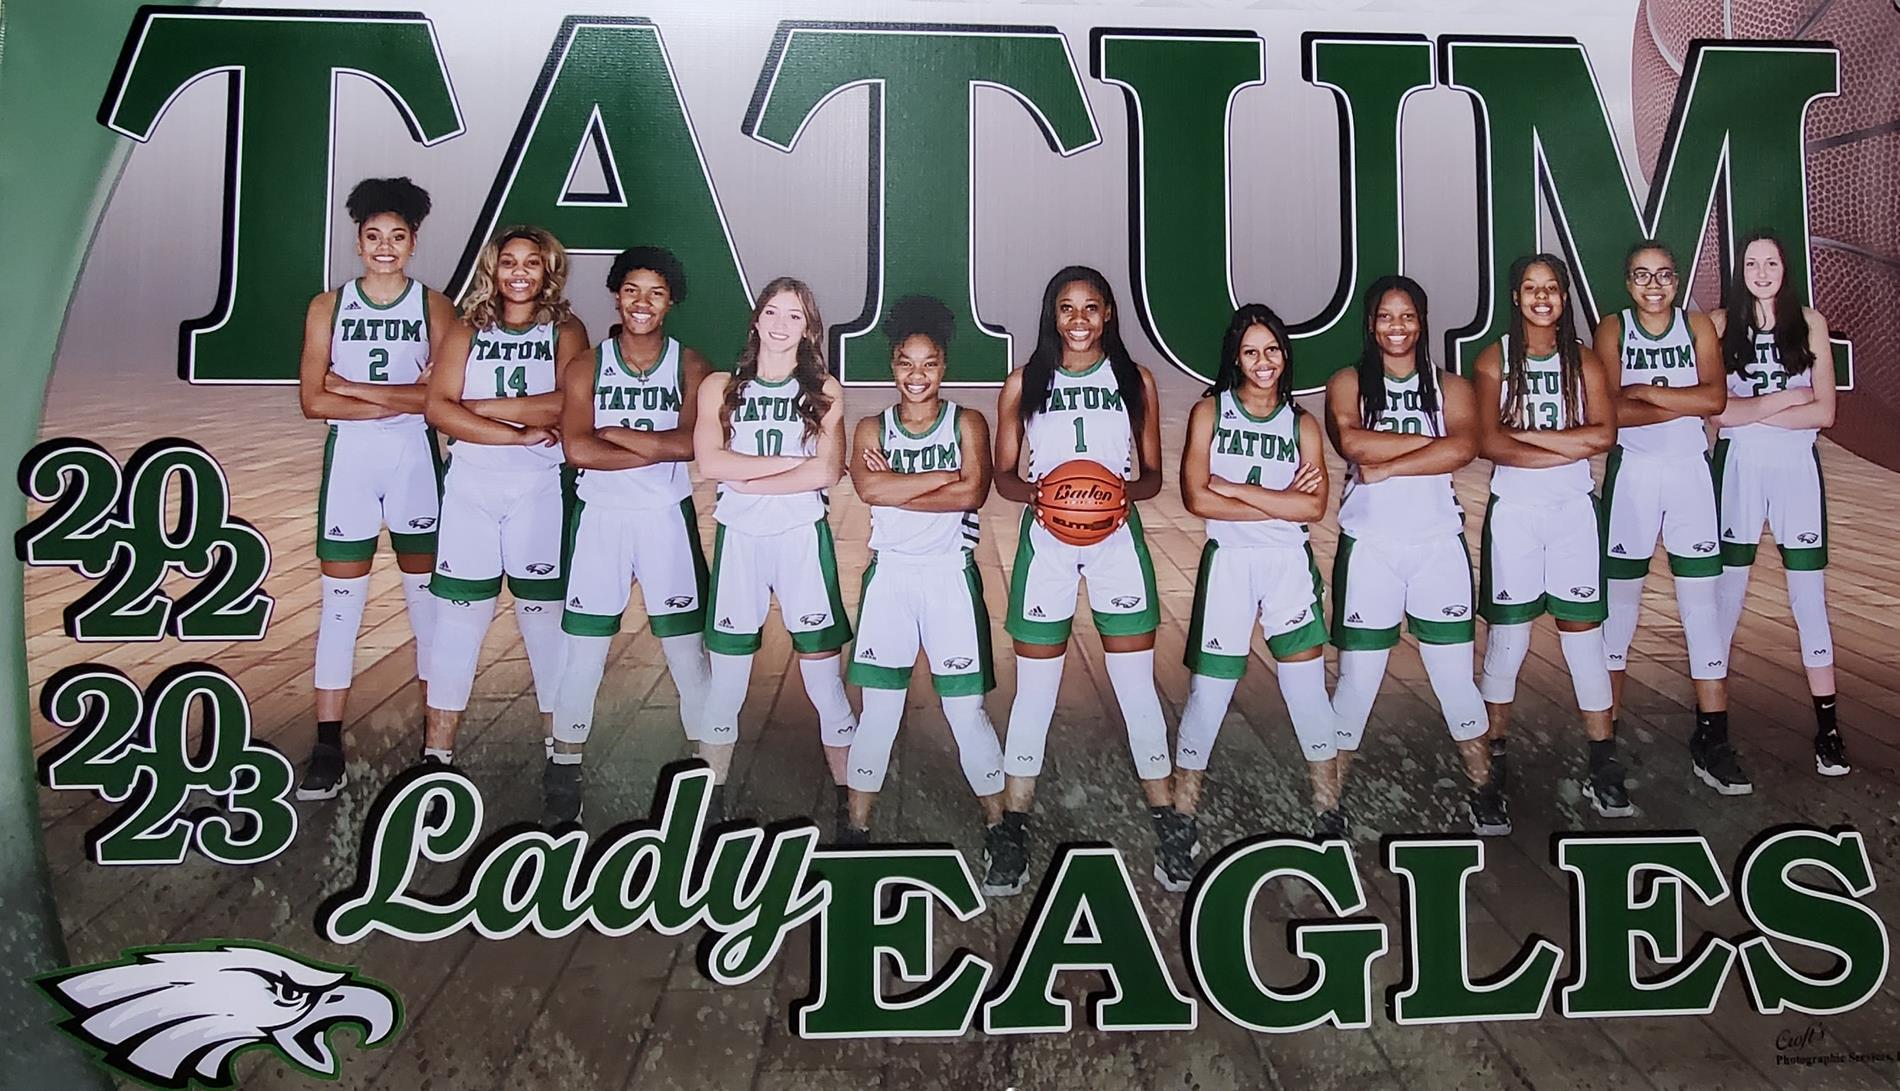 Lady Eagles Basketball Team Photo